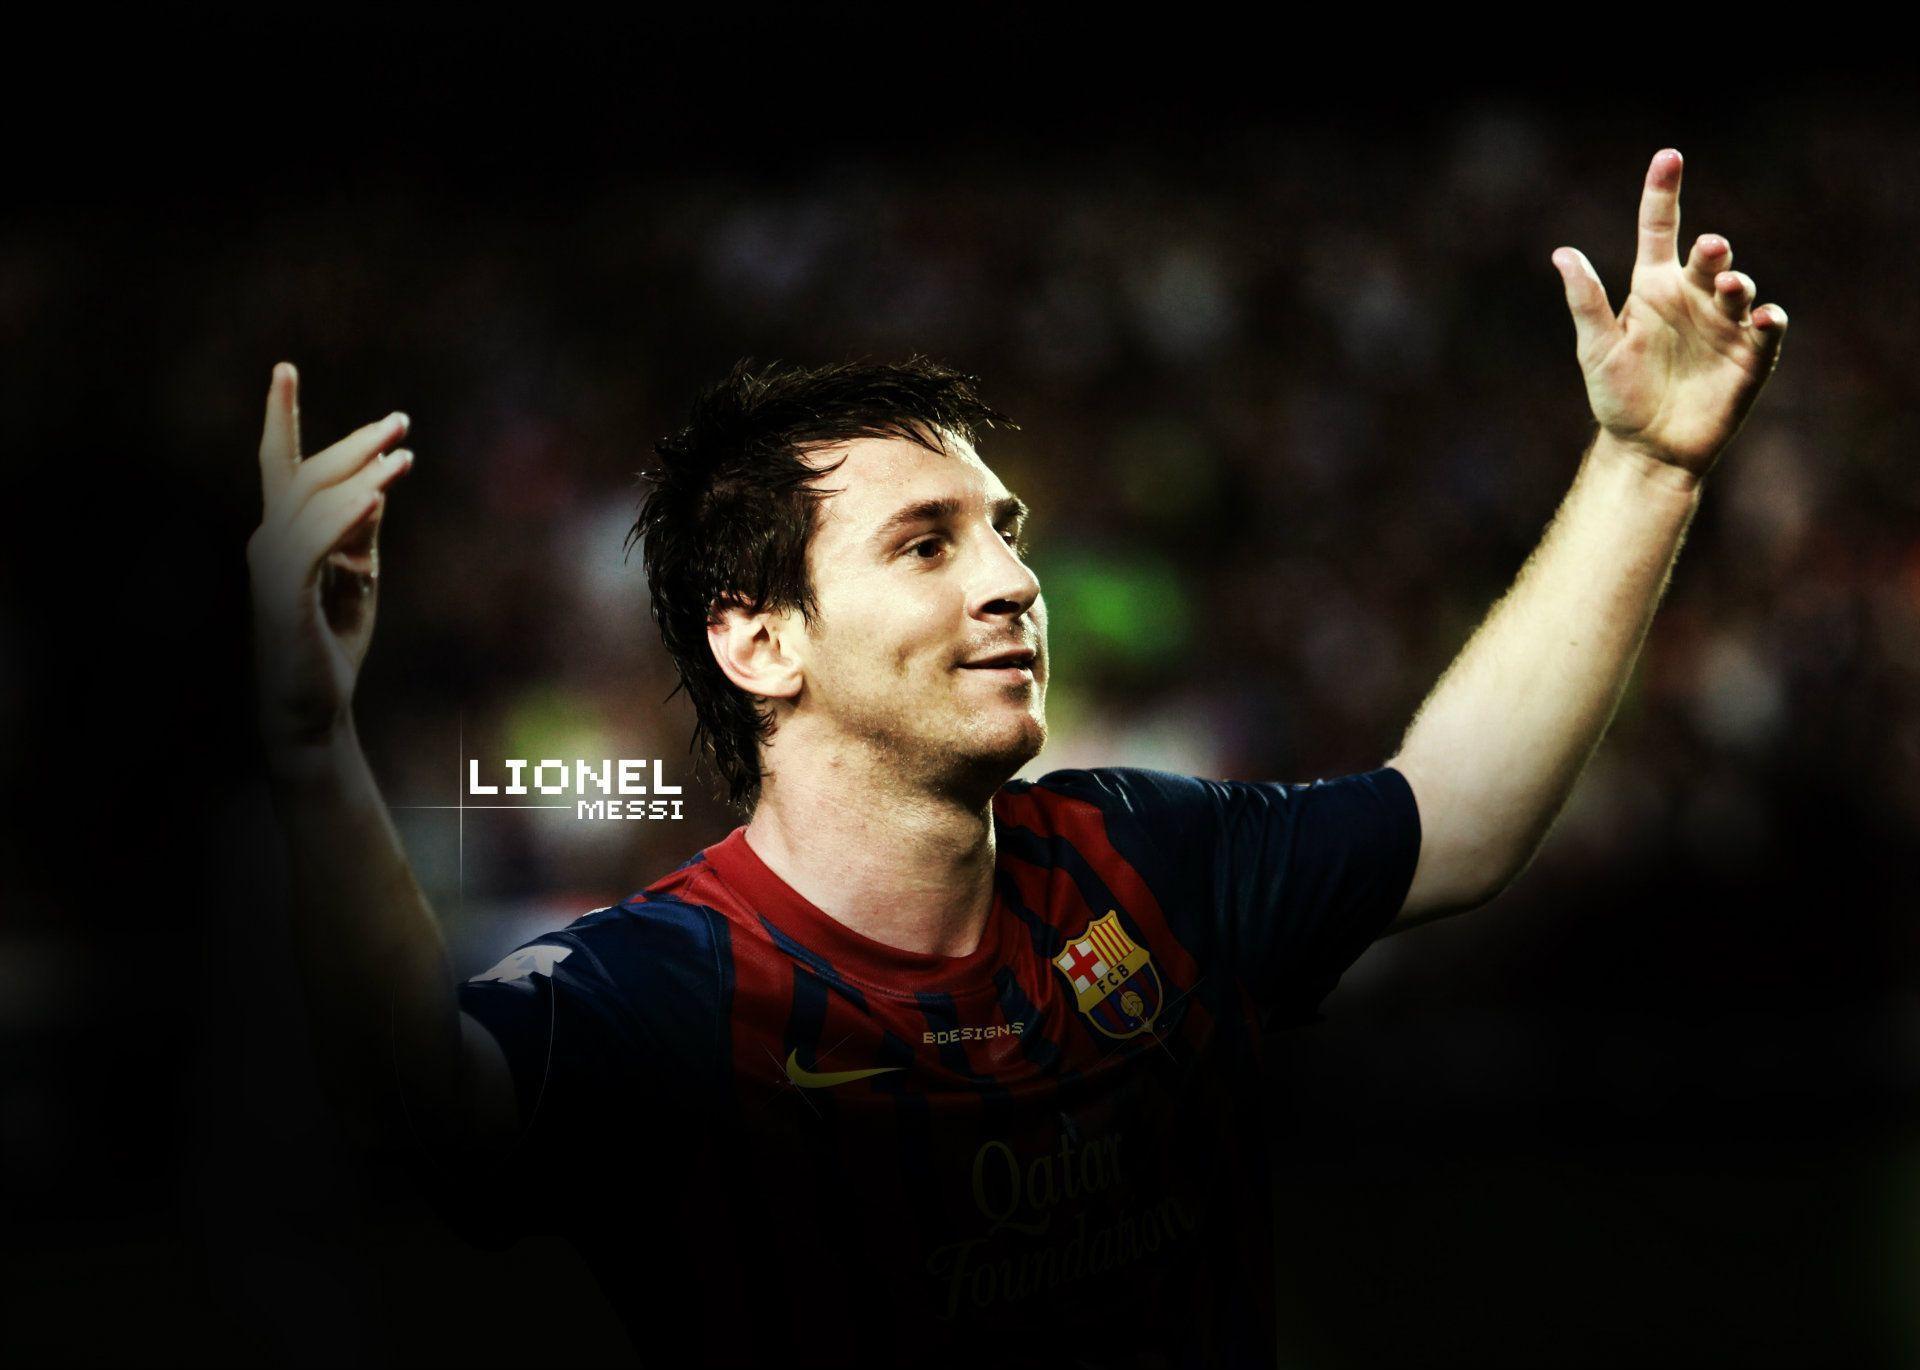 Lionel Messi. Most HD Wallpaper Picture Desktop Background